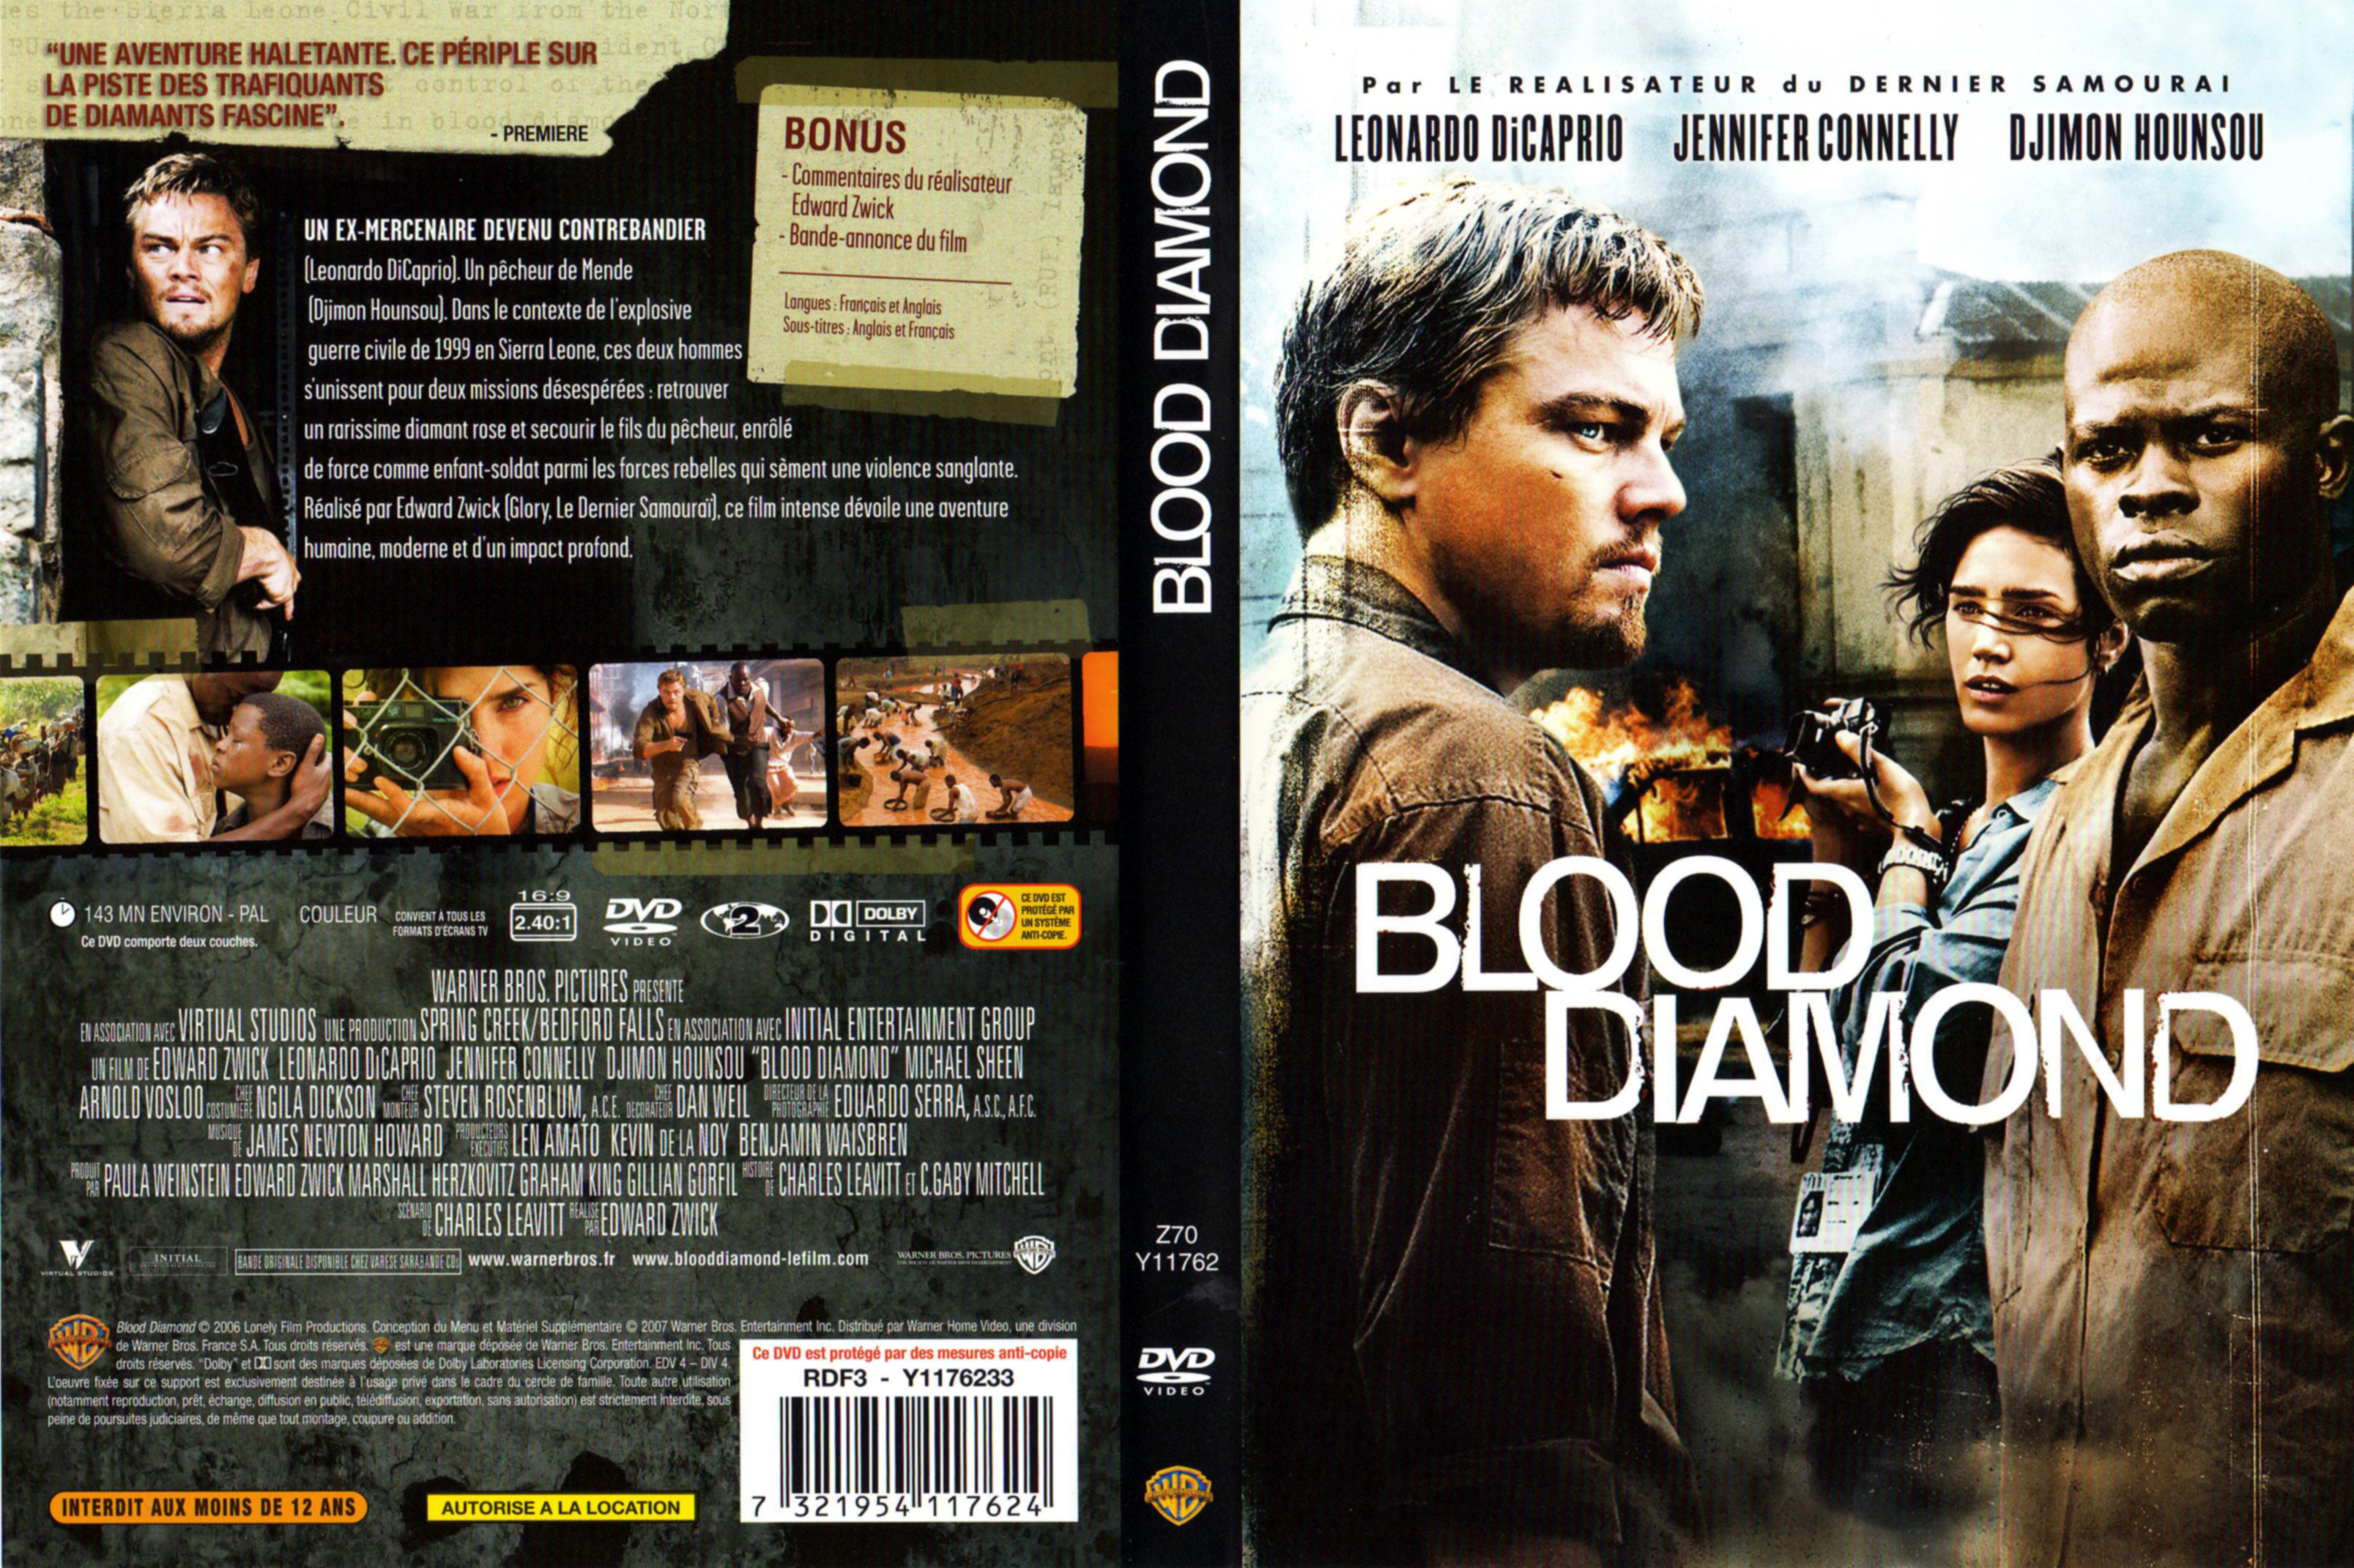 Jaquette DVD Blood diamond